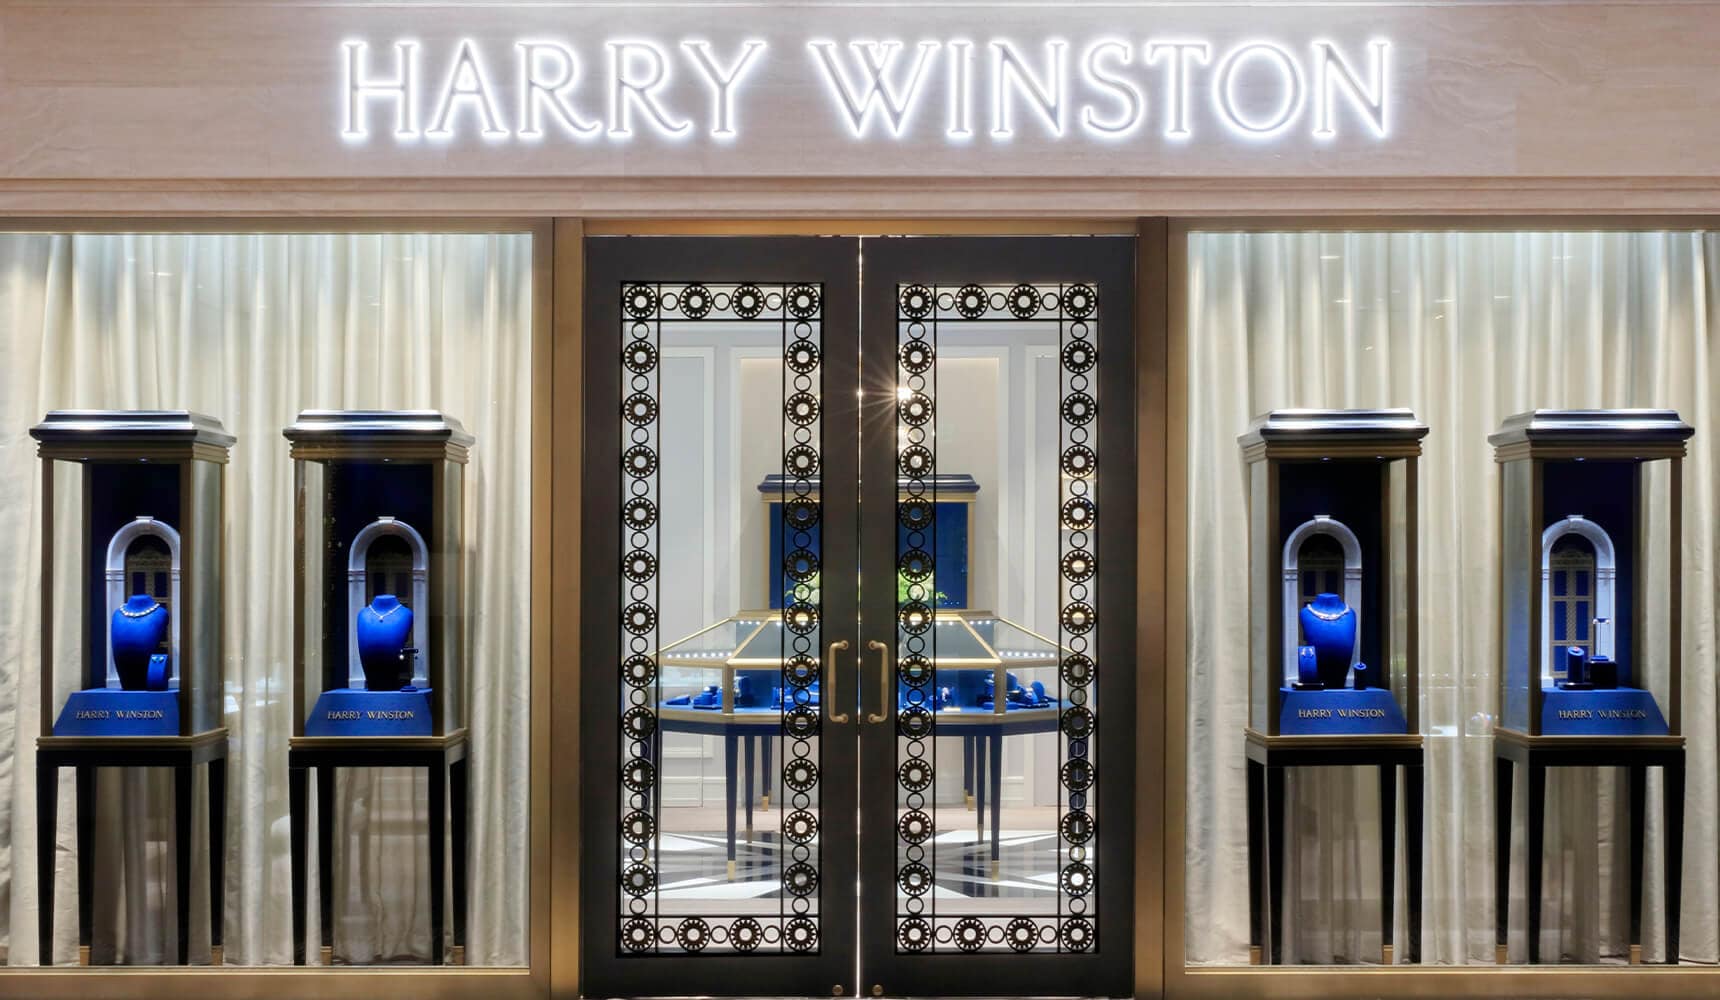 The entrance to the Harry Winston Taipei Regent Salon